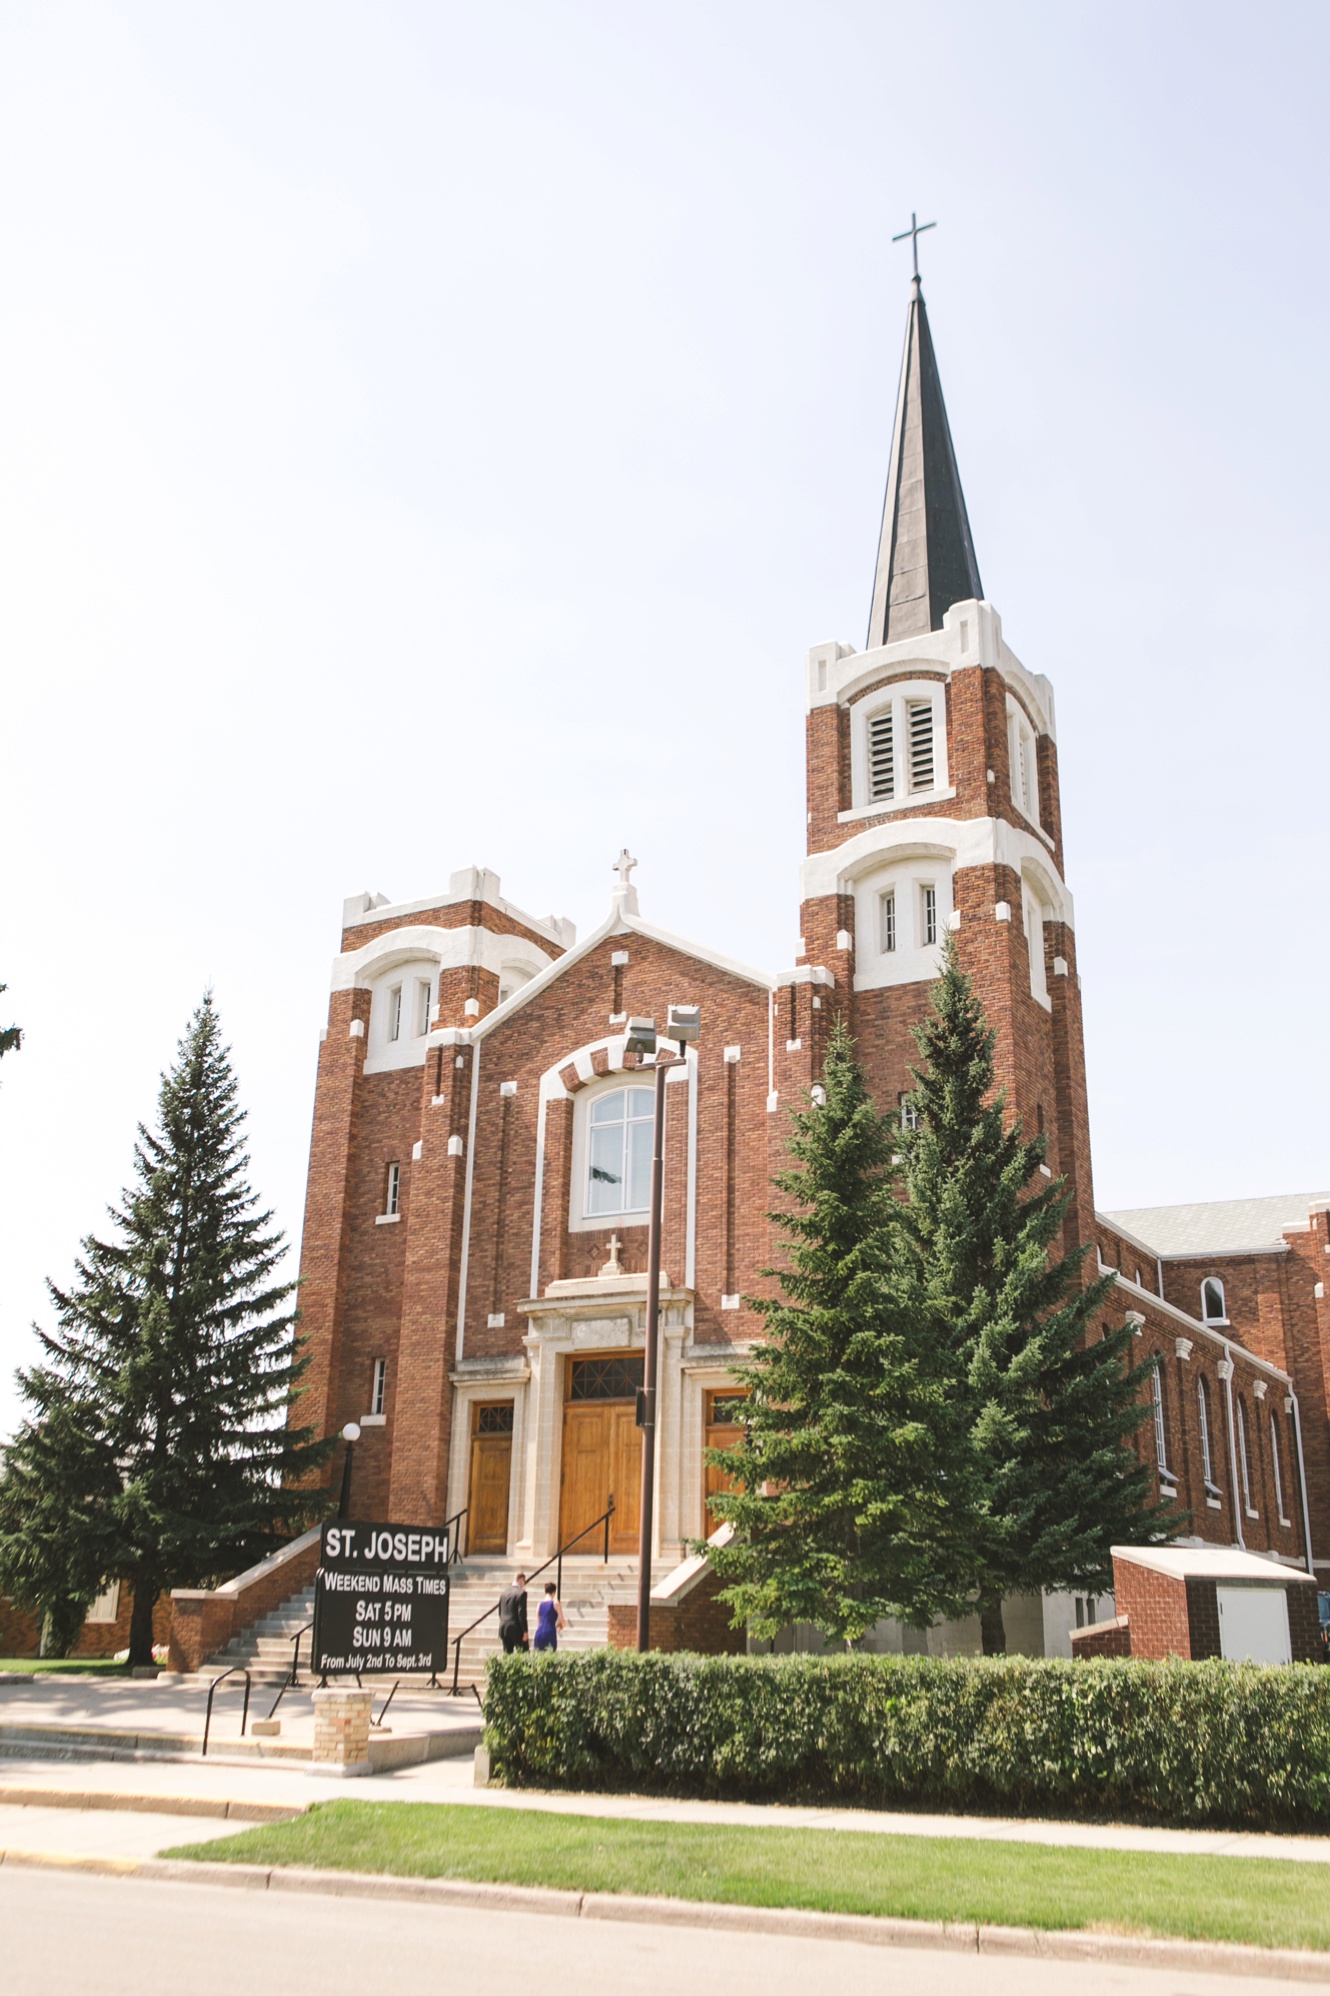 St Josephs catholic church in Moose Jaw Saskatchewan